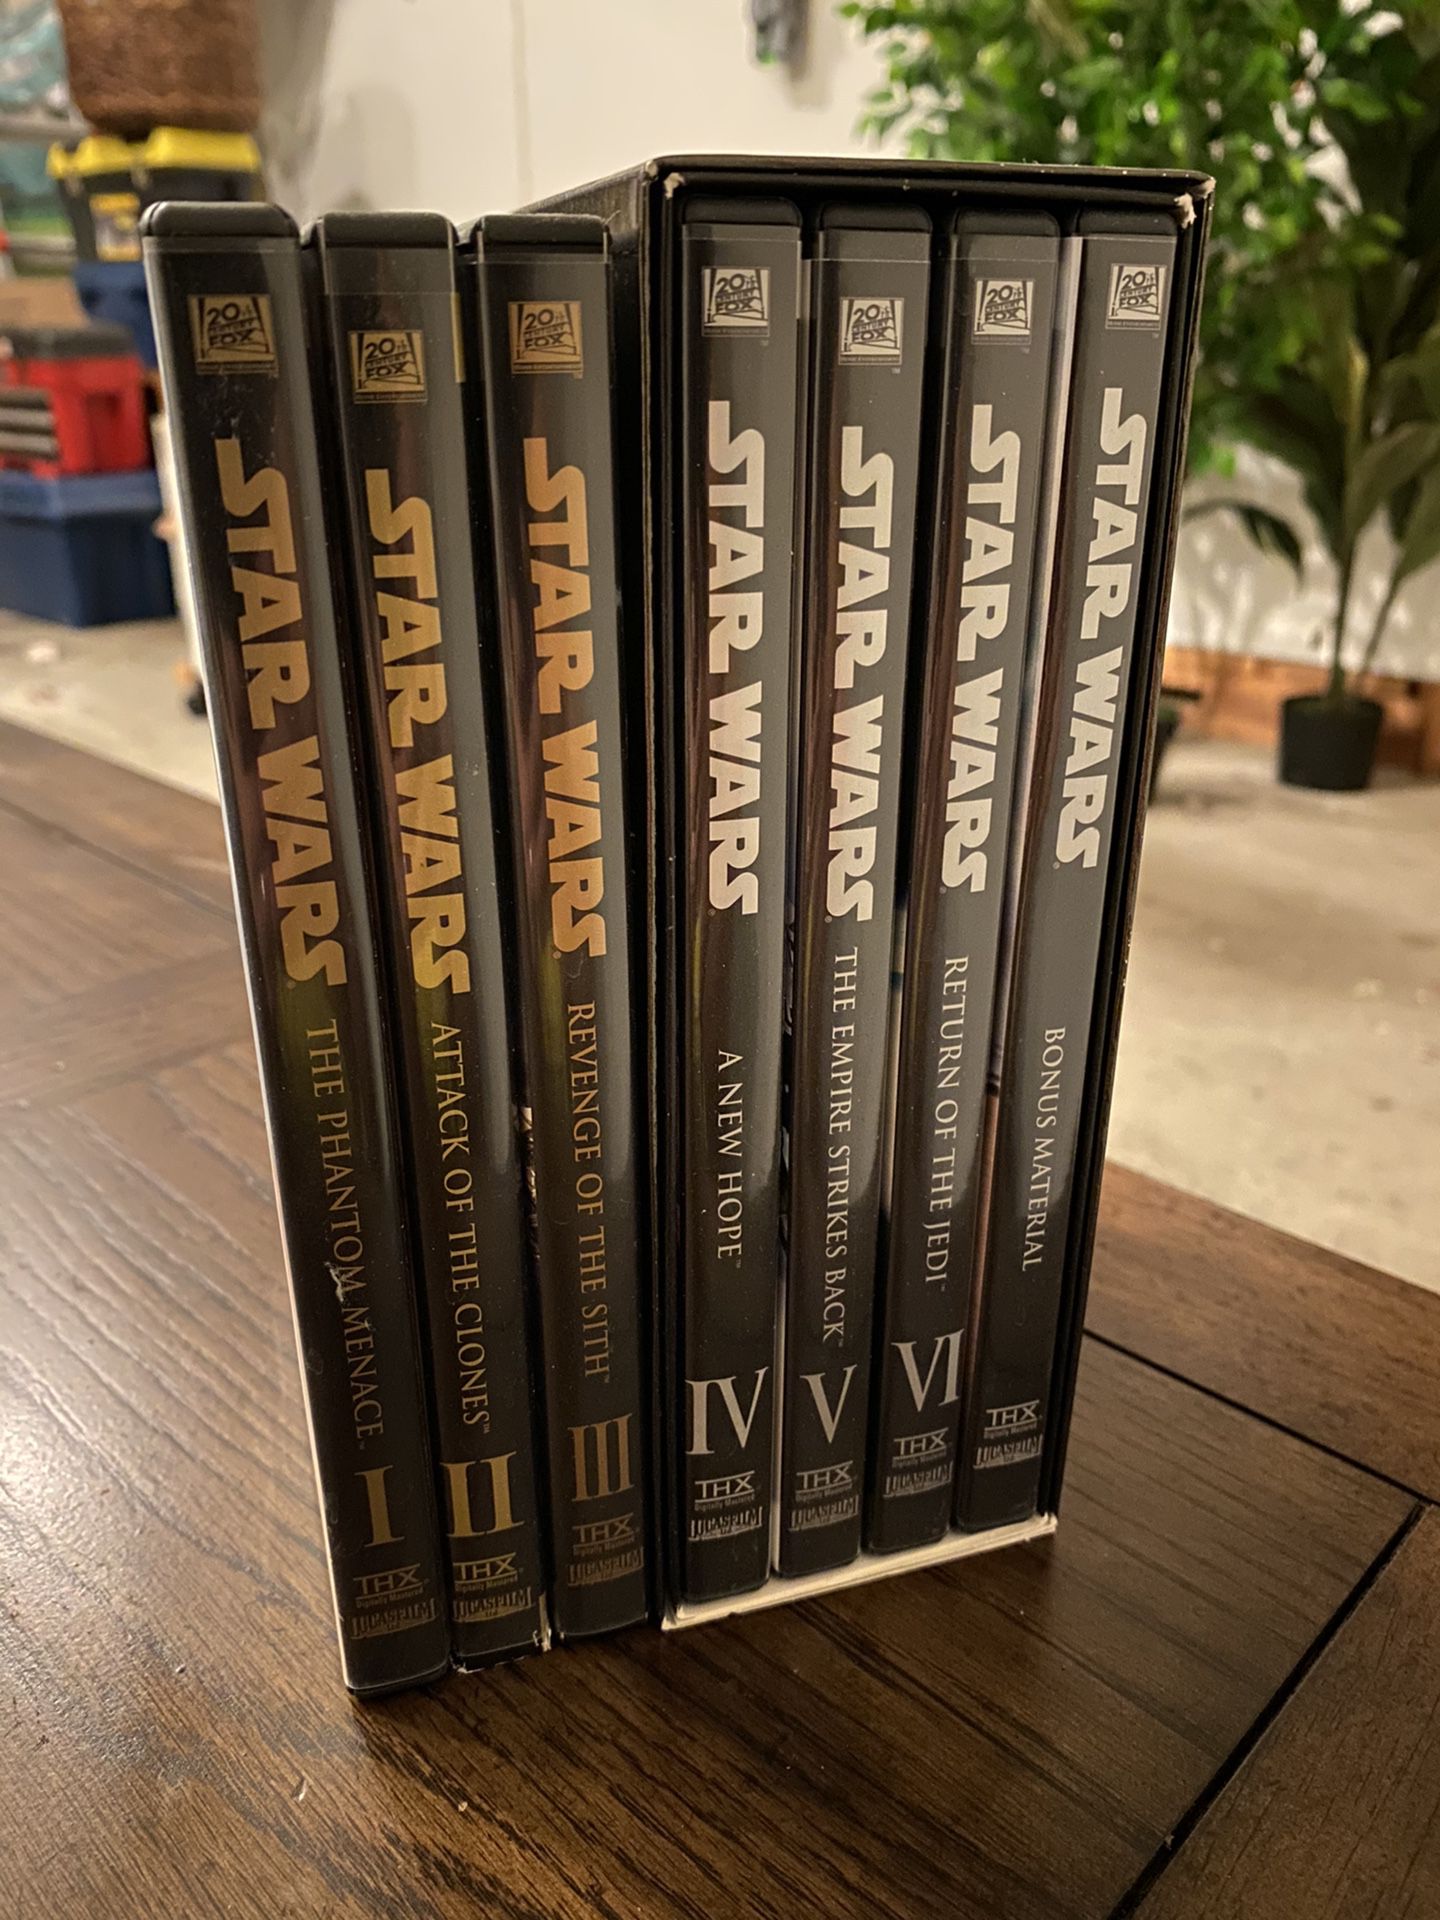 Star Wars trilogy set plus bonus DVD (I-VI)